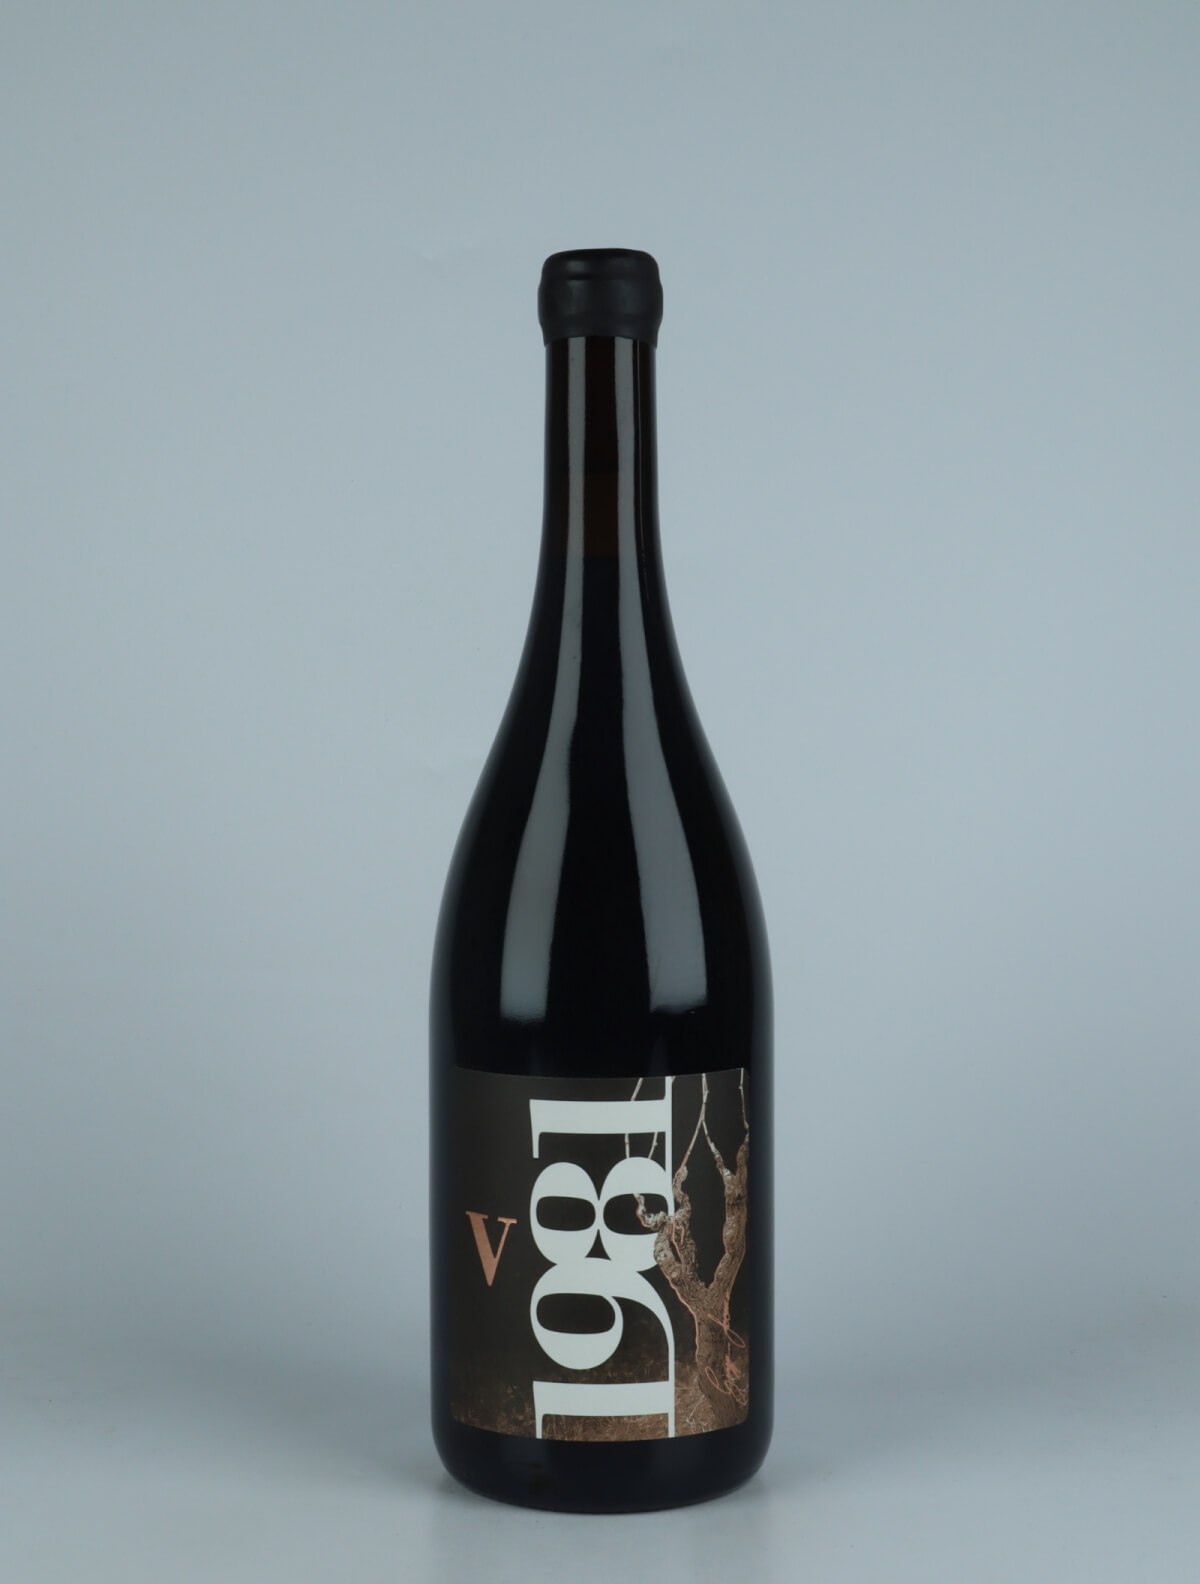 En flaske 2020 Vigna 1981 Rødvin fra Giuseppe Lazzaro, Sicilien i Italien